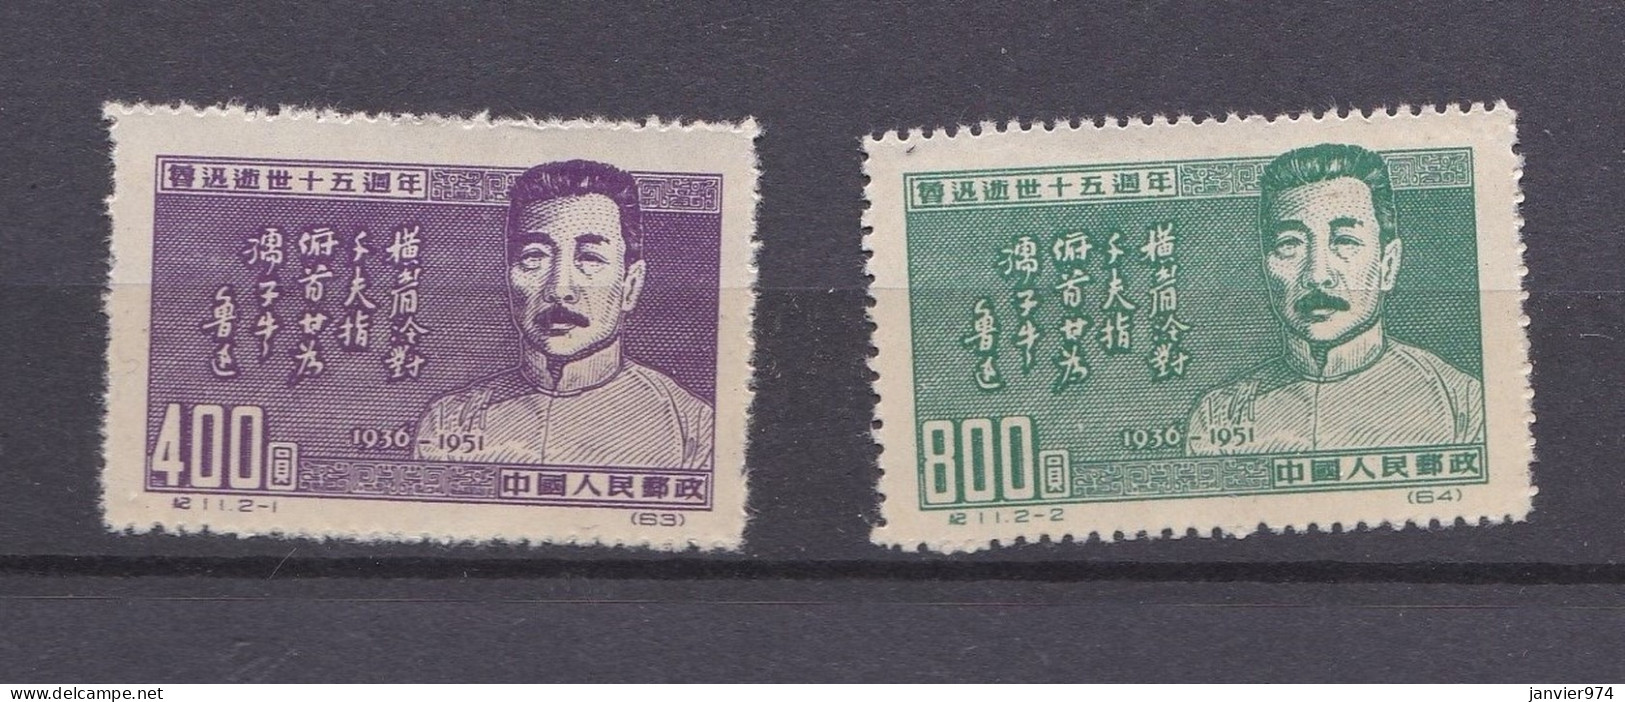 Chine 1951 La Serie Complete Anniversaire De La Mort De Lu Xun, 2 Timbres Neufs 127 – 128 - Unused Stamps